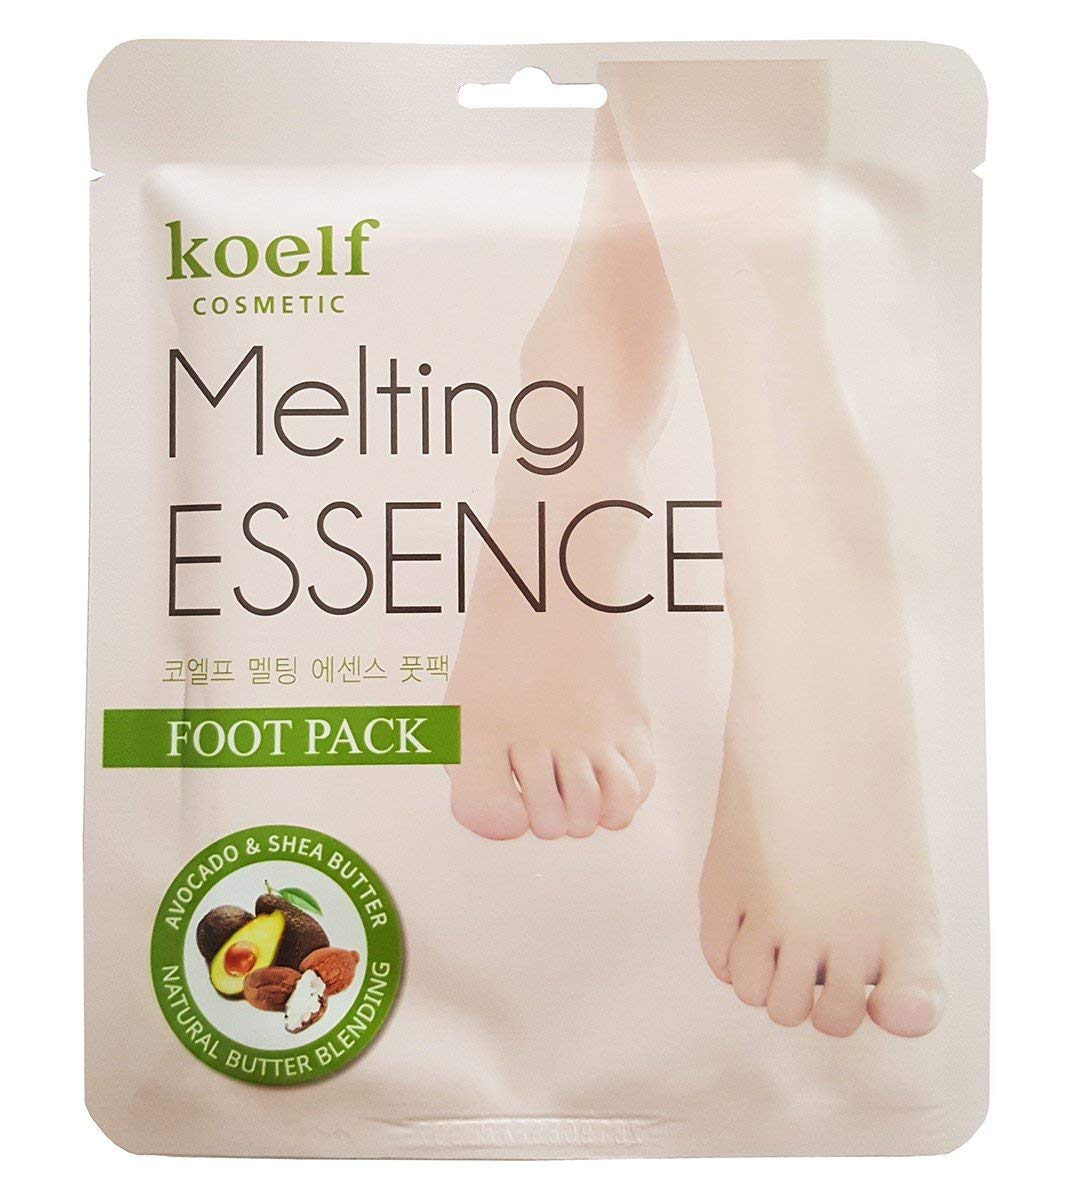 KOELF Melting Essence Foot Pack - 1pack (10pcs)